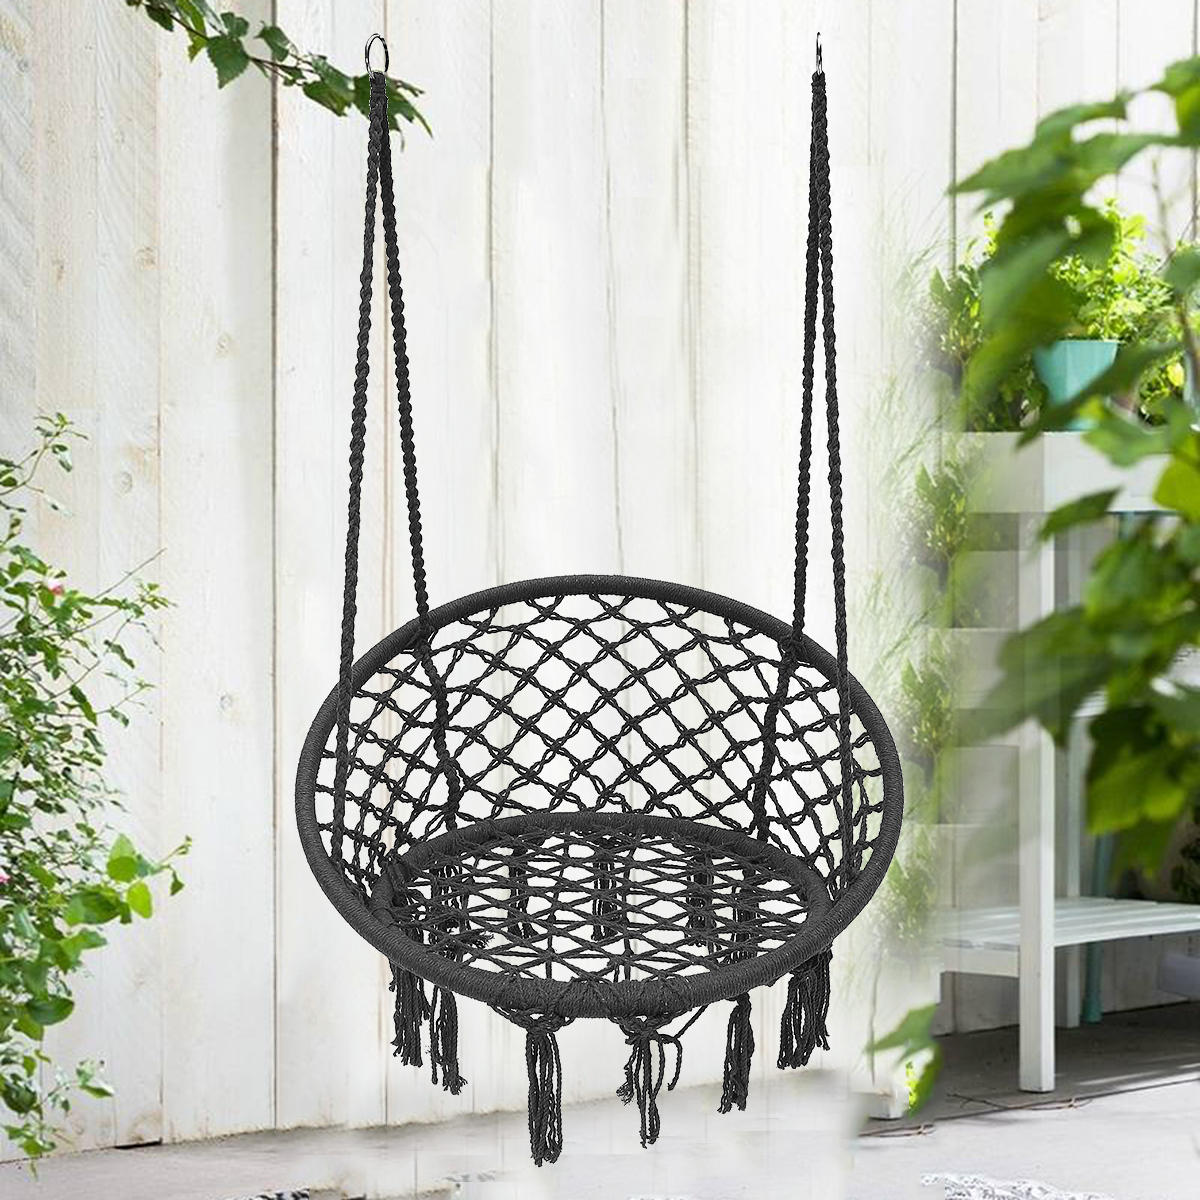 Outdoor-Hanging-Hammock-Chair-Camping-Mesh-Single-Swing-Cushion-Max-Load-Bearing-120kg-1250338-8